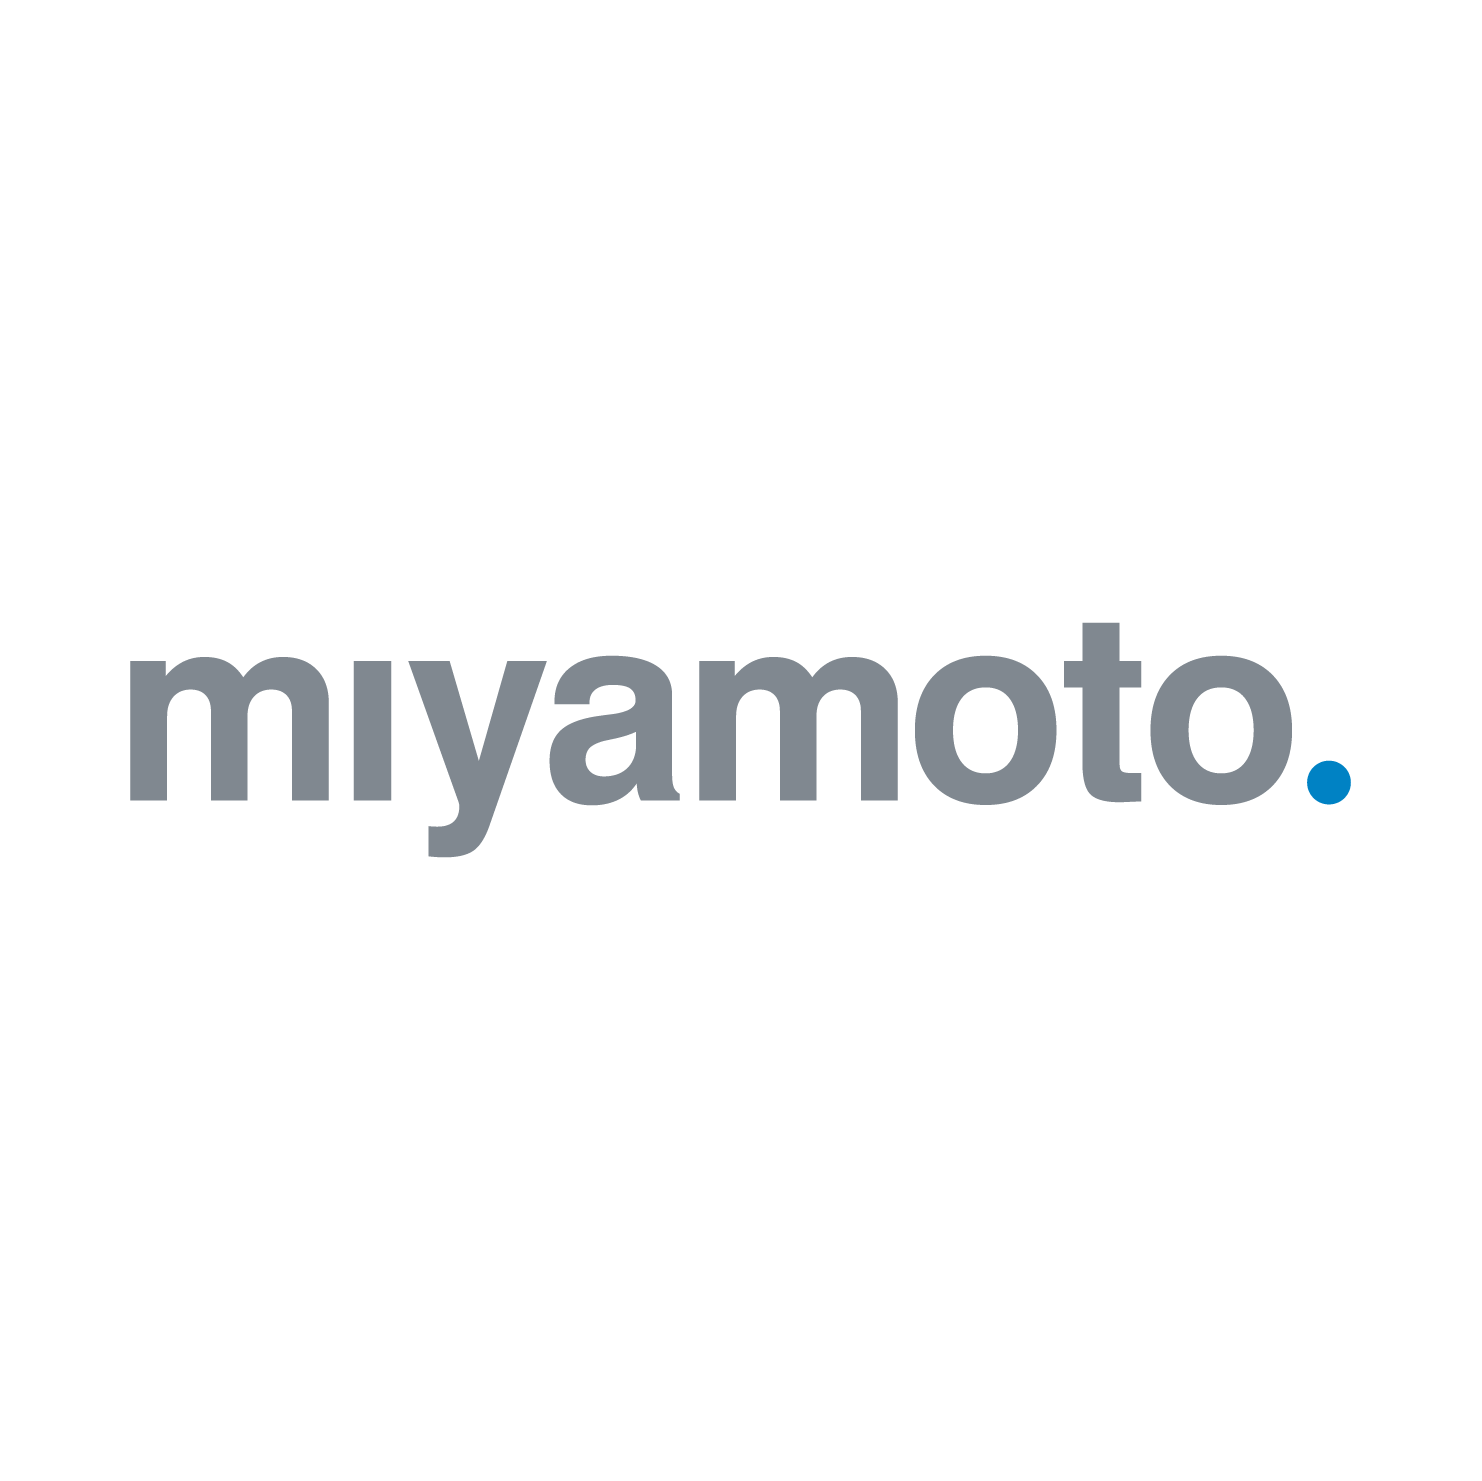 miyamoto 